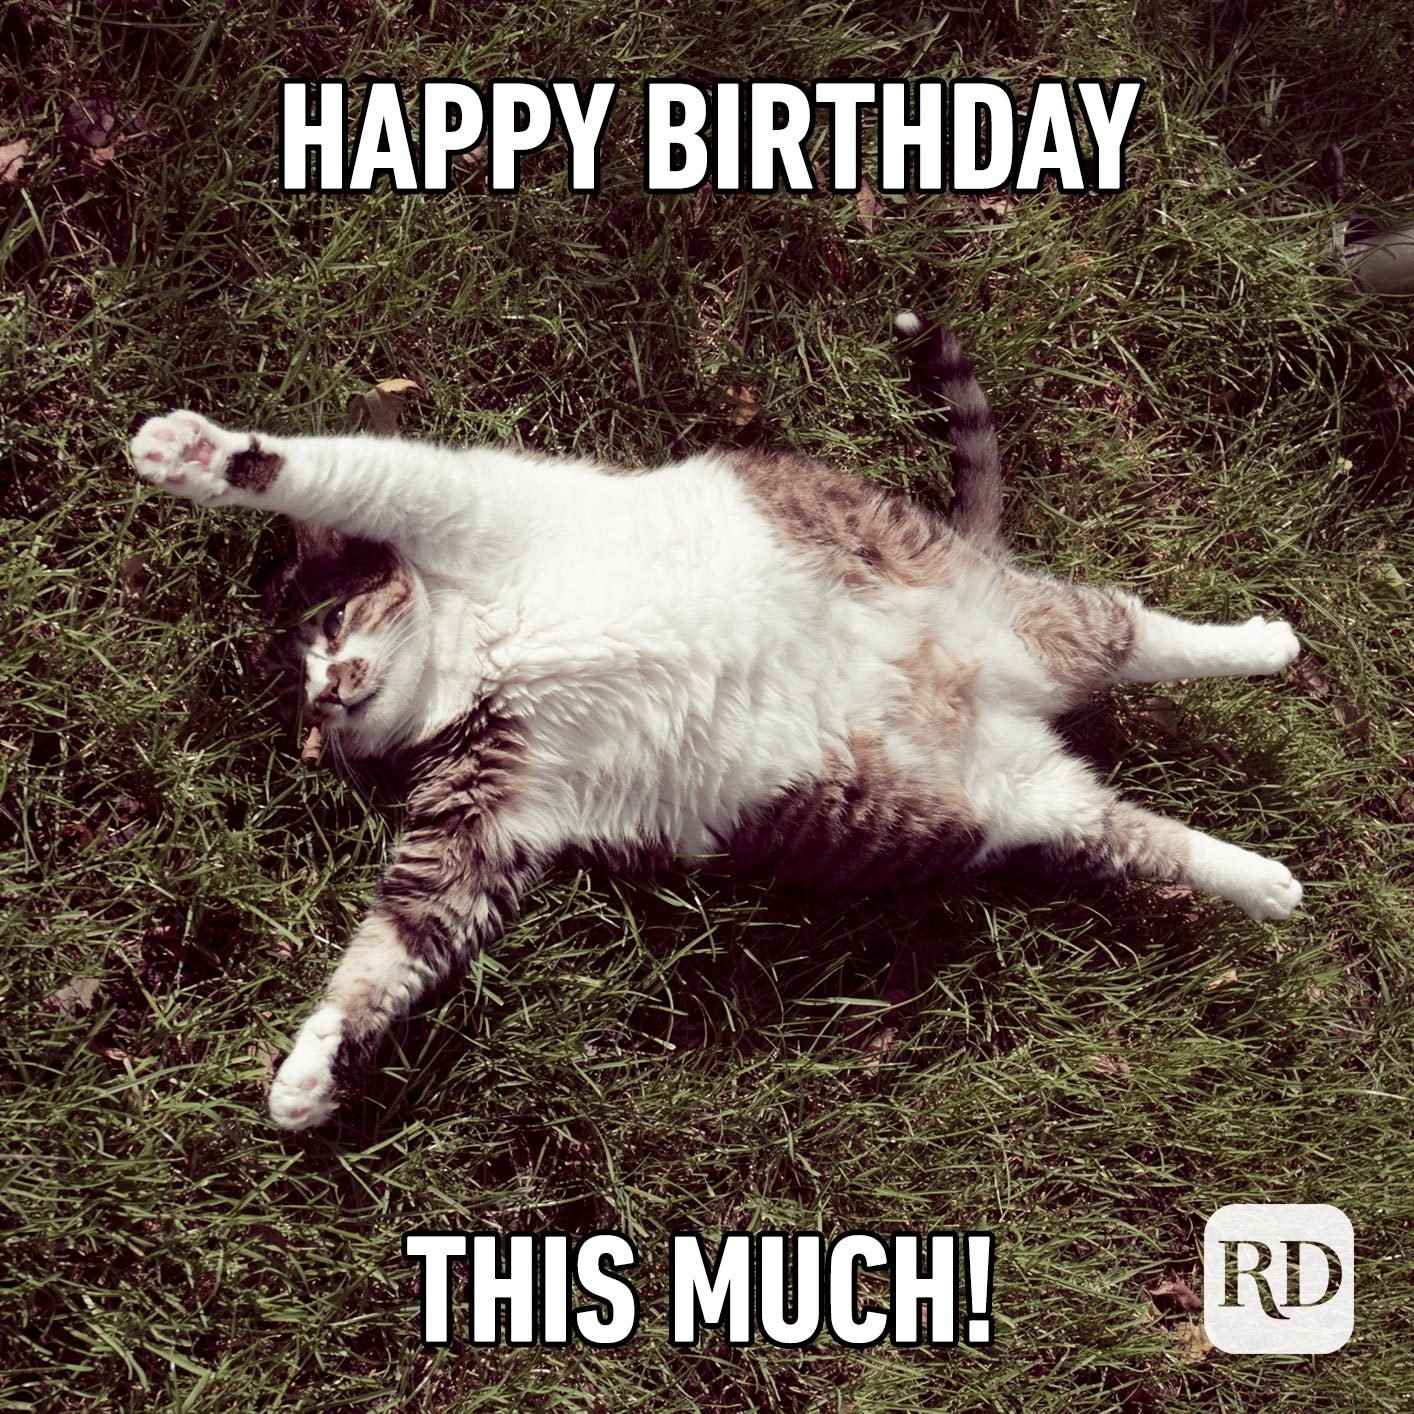 funny cat birthday meme